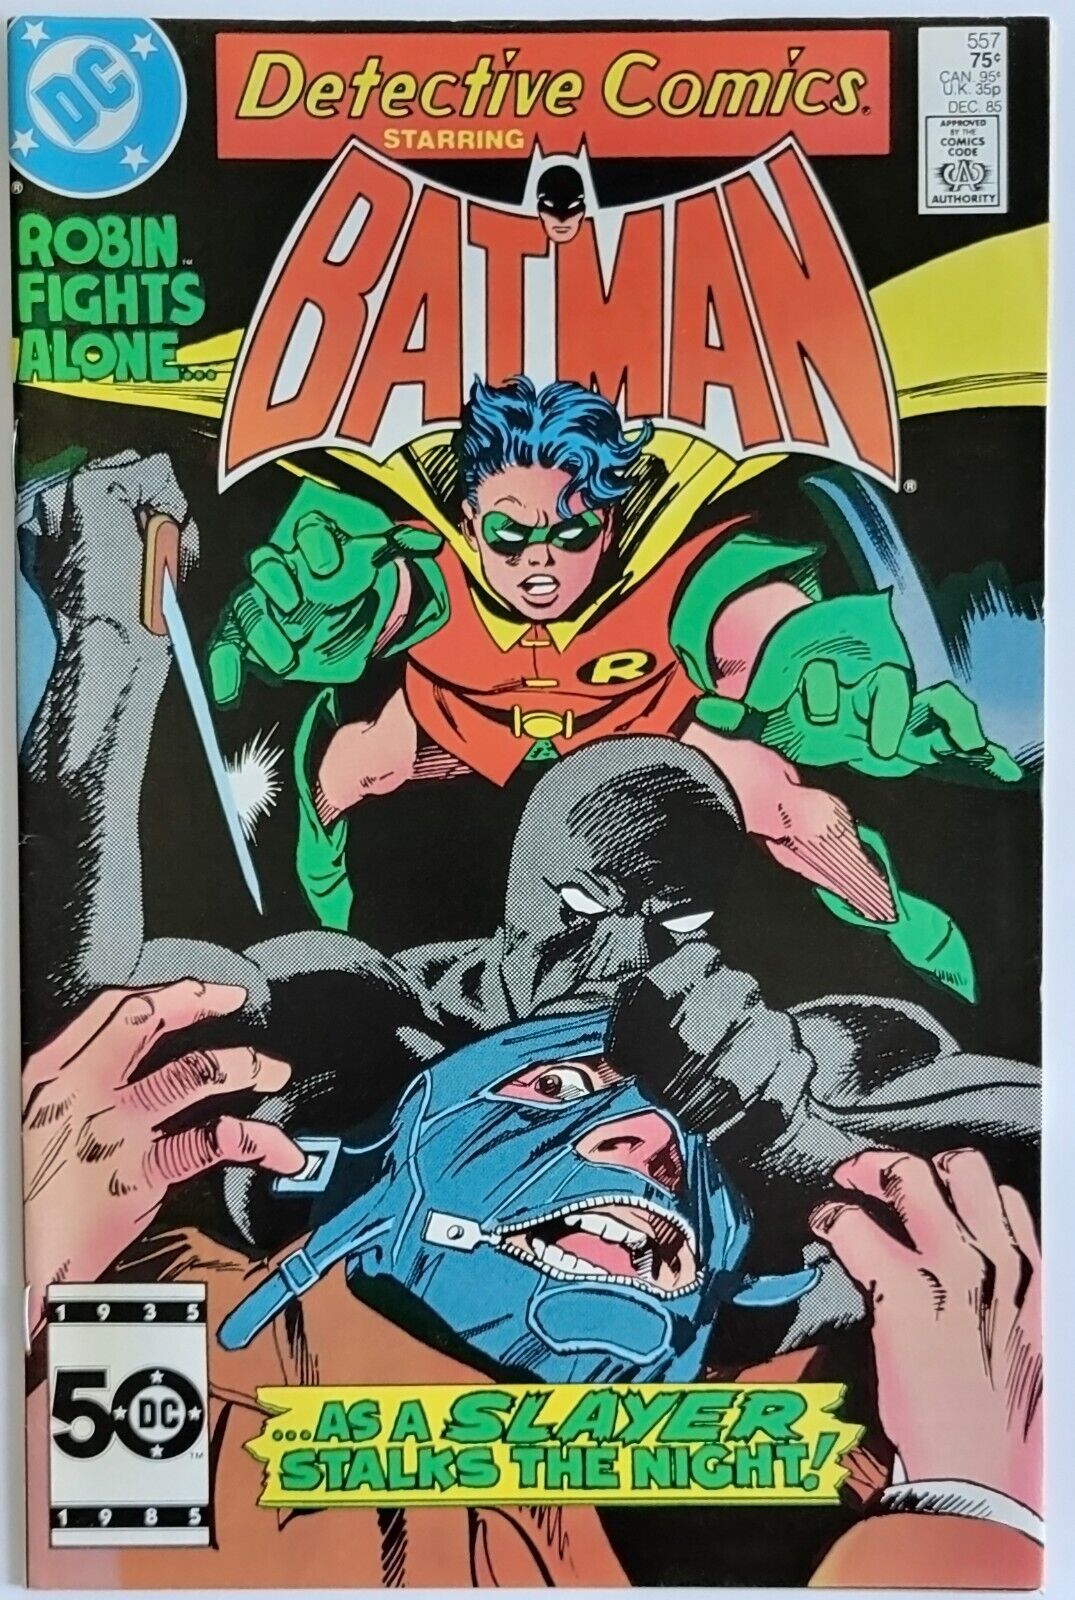 Detective Comics #557 (1985) Vintage Batman, Robin and Murder Under Red Rain